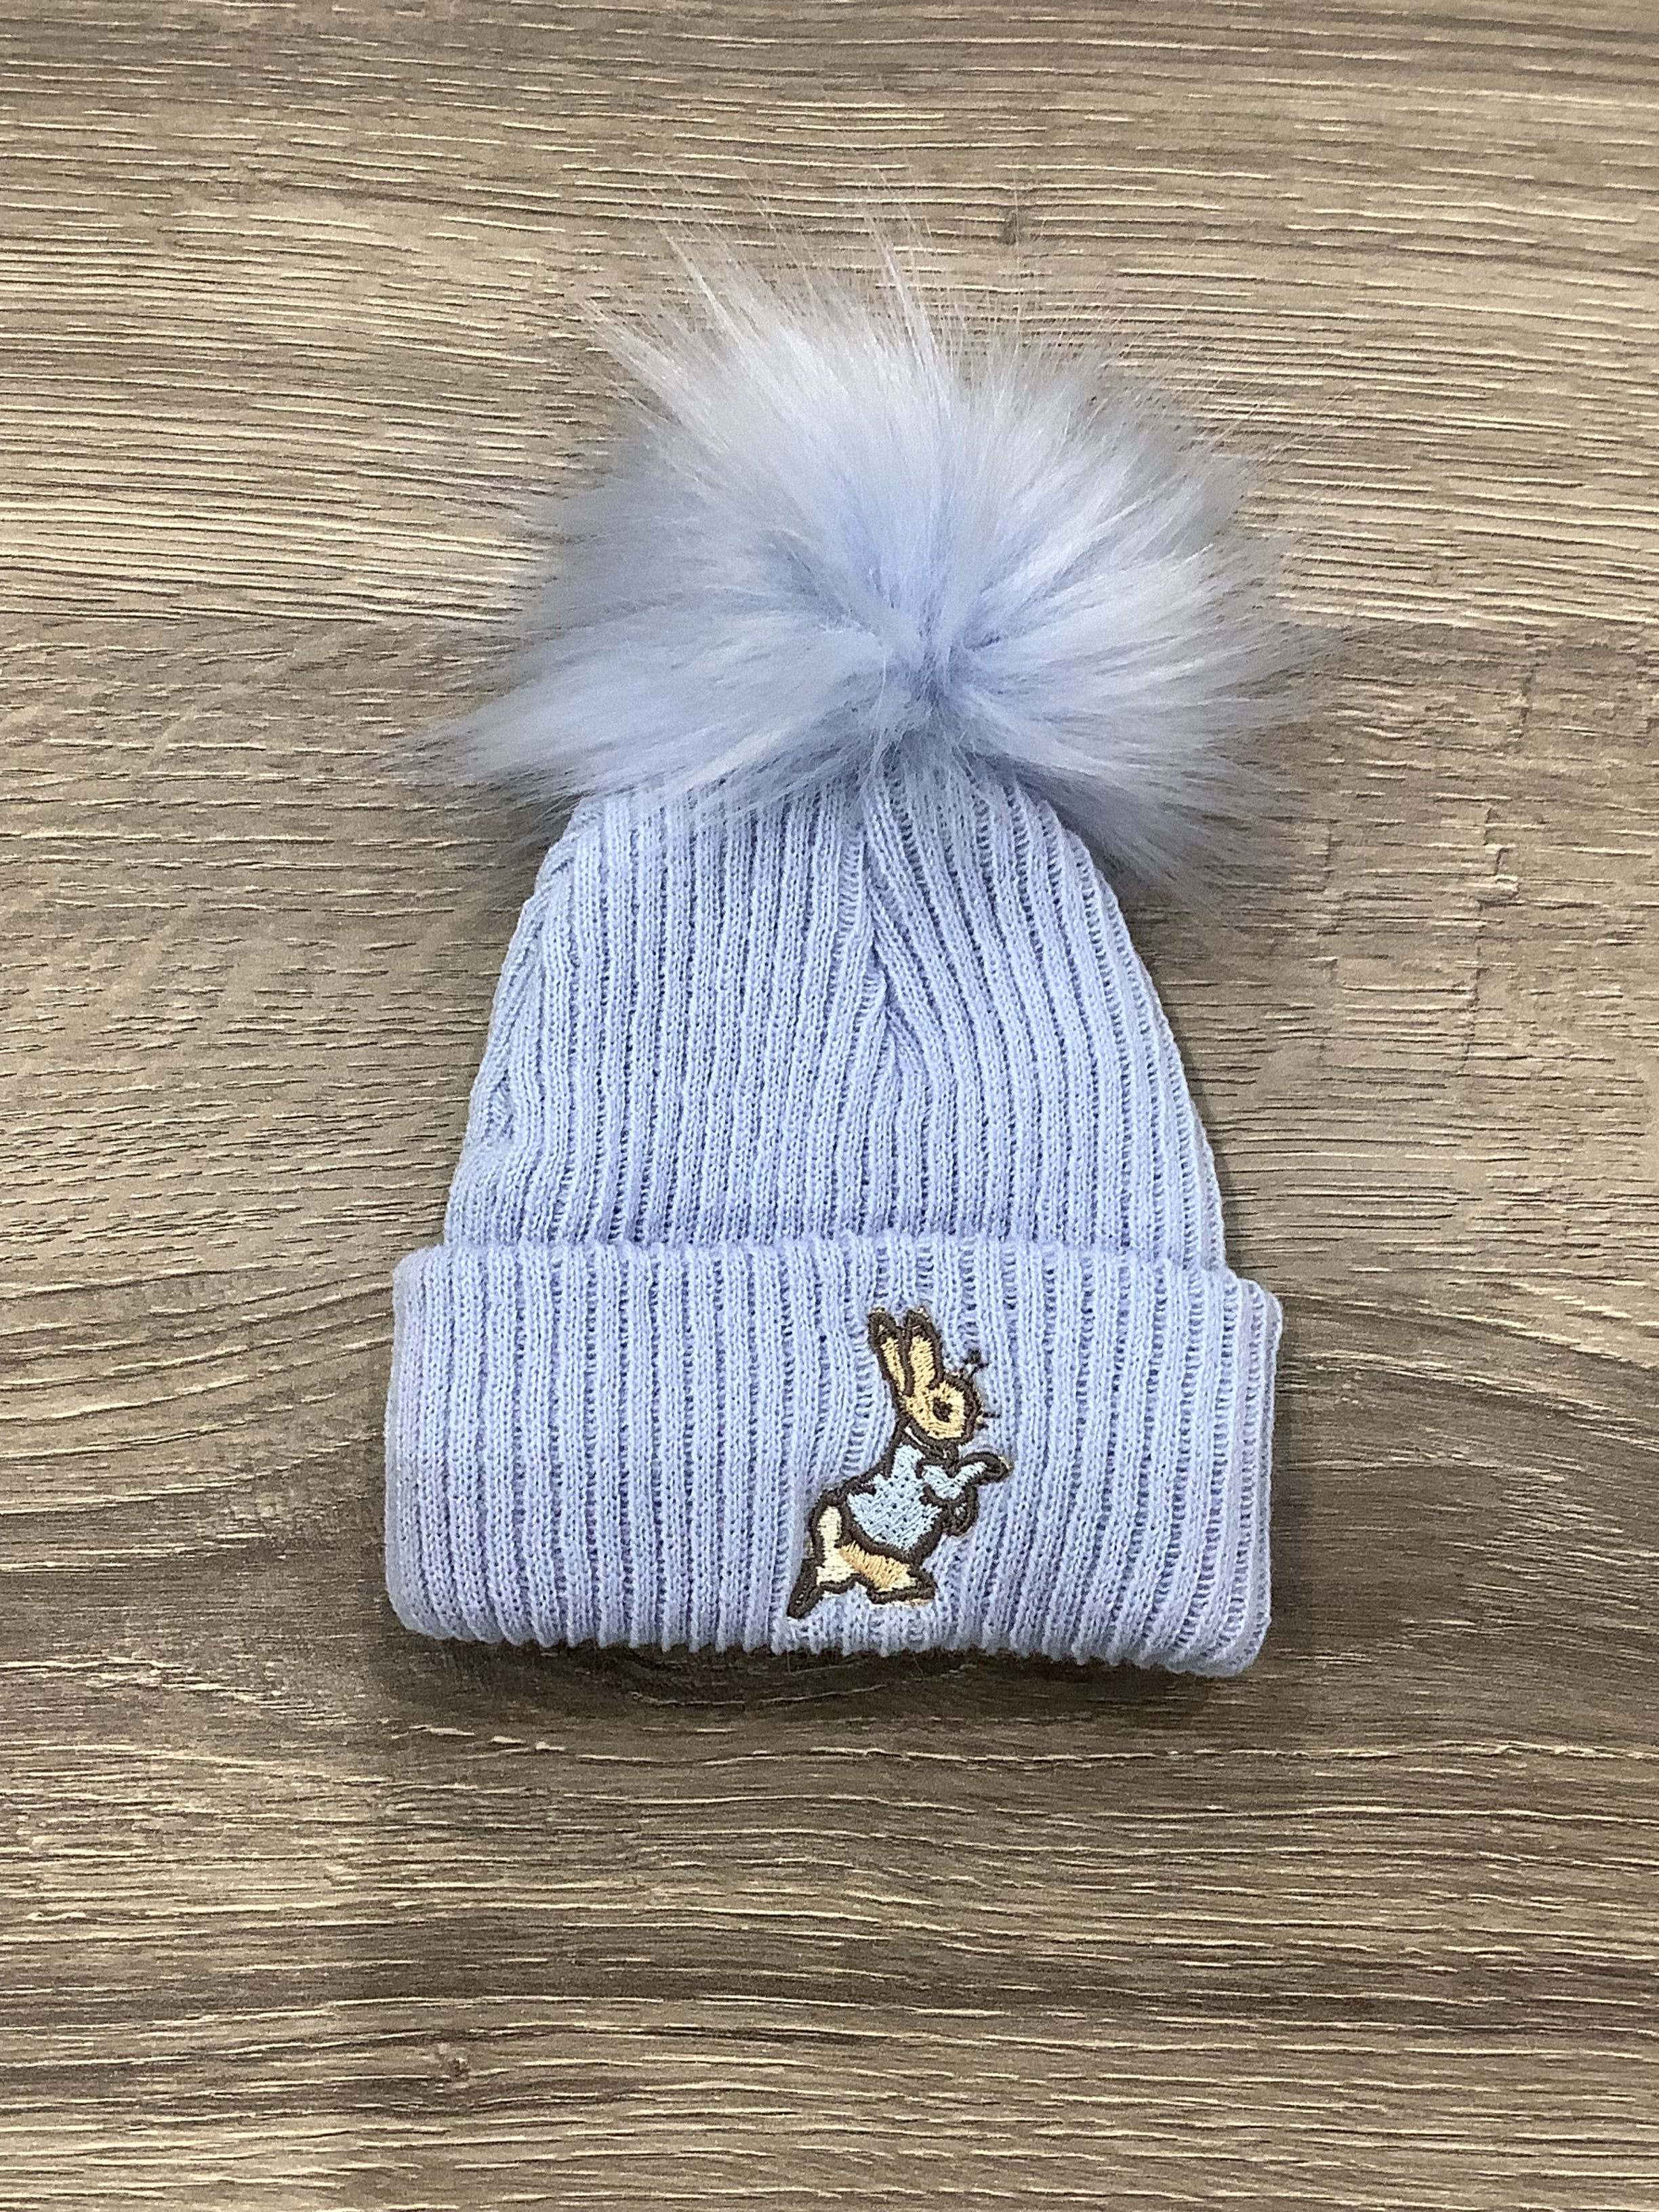 1st Size 1 fur pom pom Blue Peter Rabbit Hat 0-4 Months